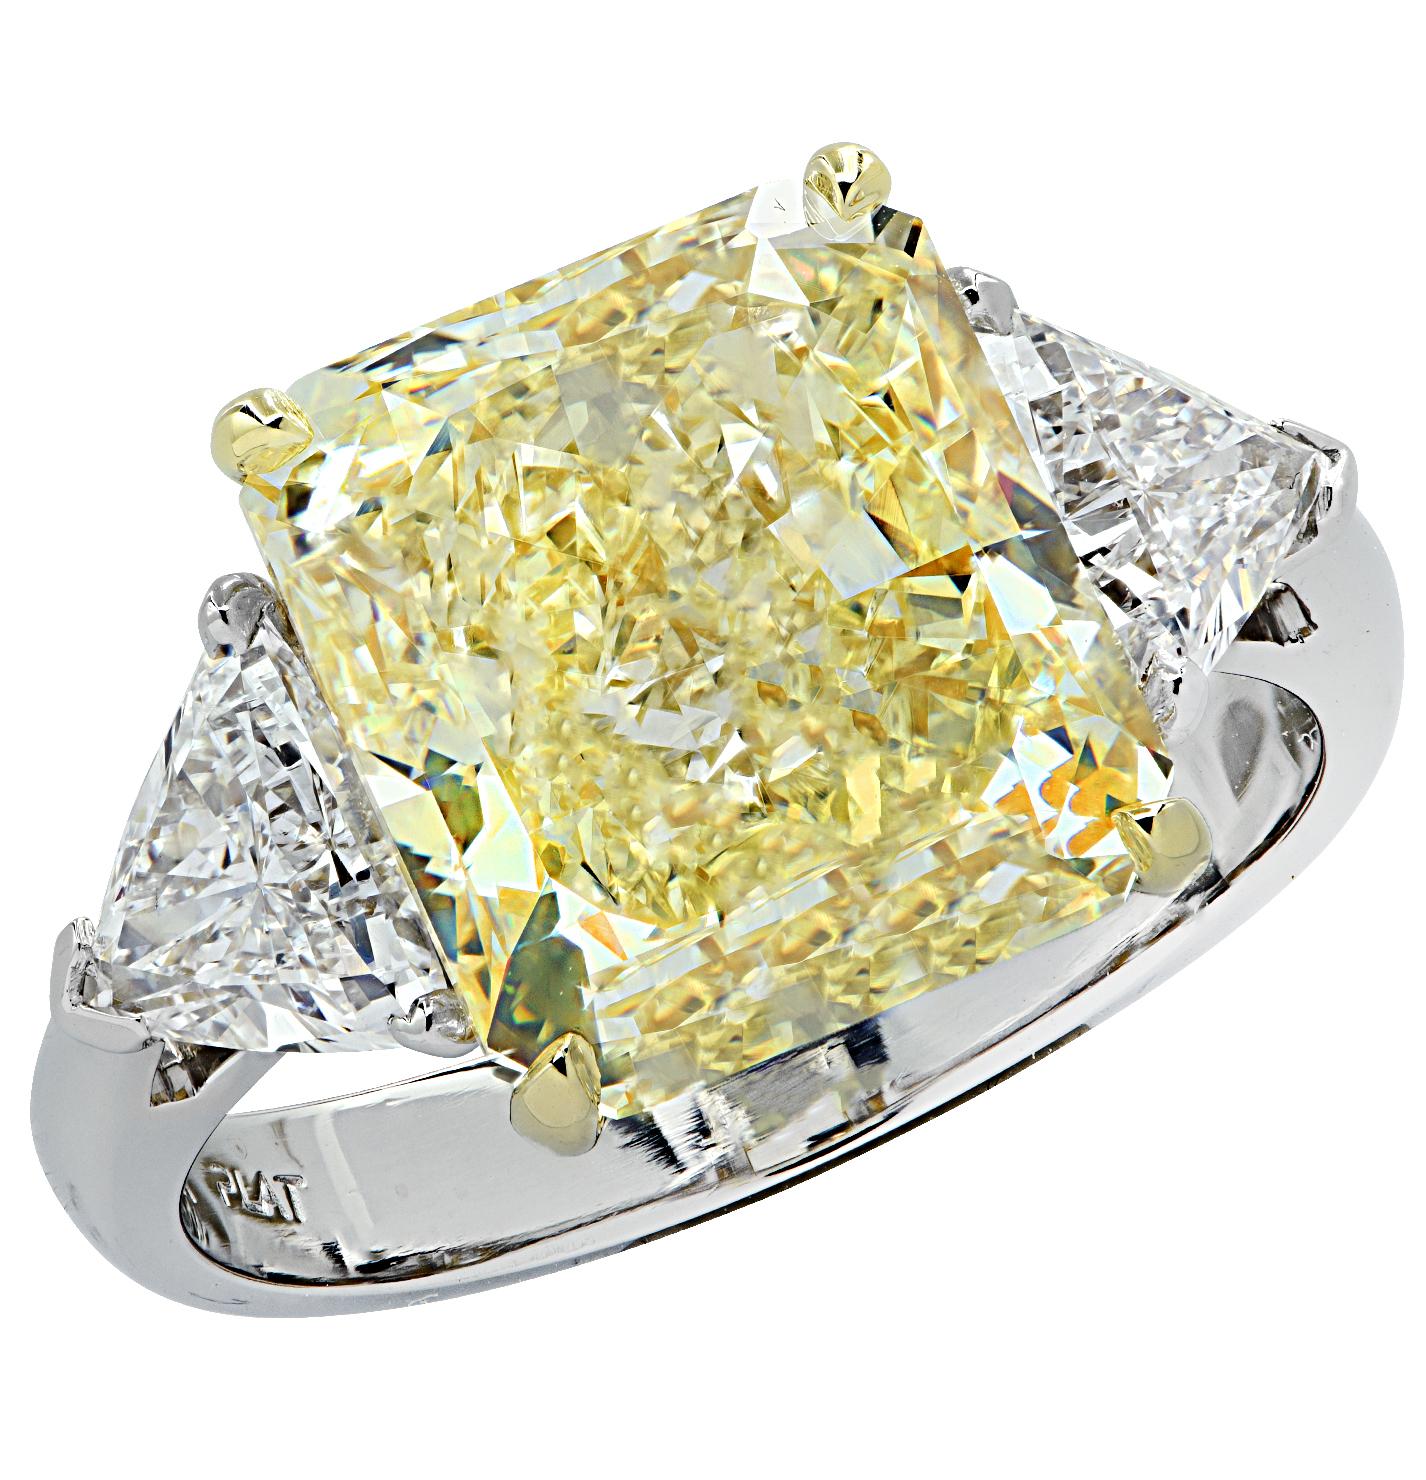 Modern Vivid Diamonds GIA Certified 6.42 Carat Fancy Yellow Diamond Engagement Ring